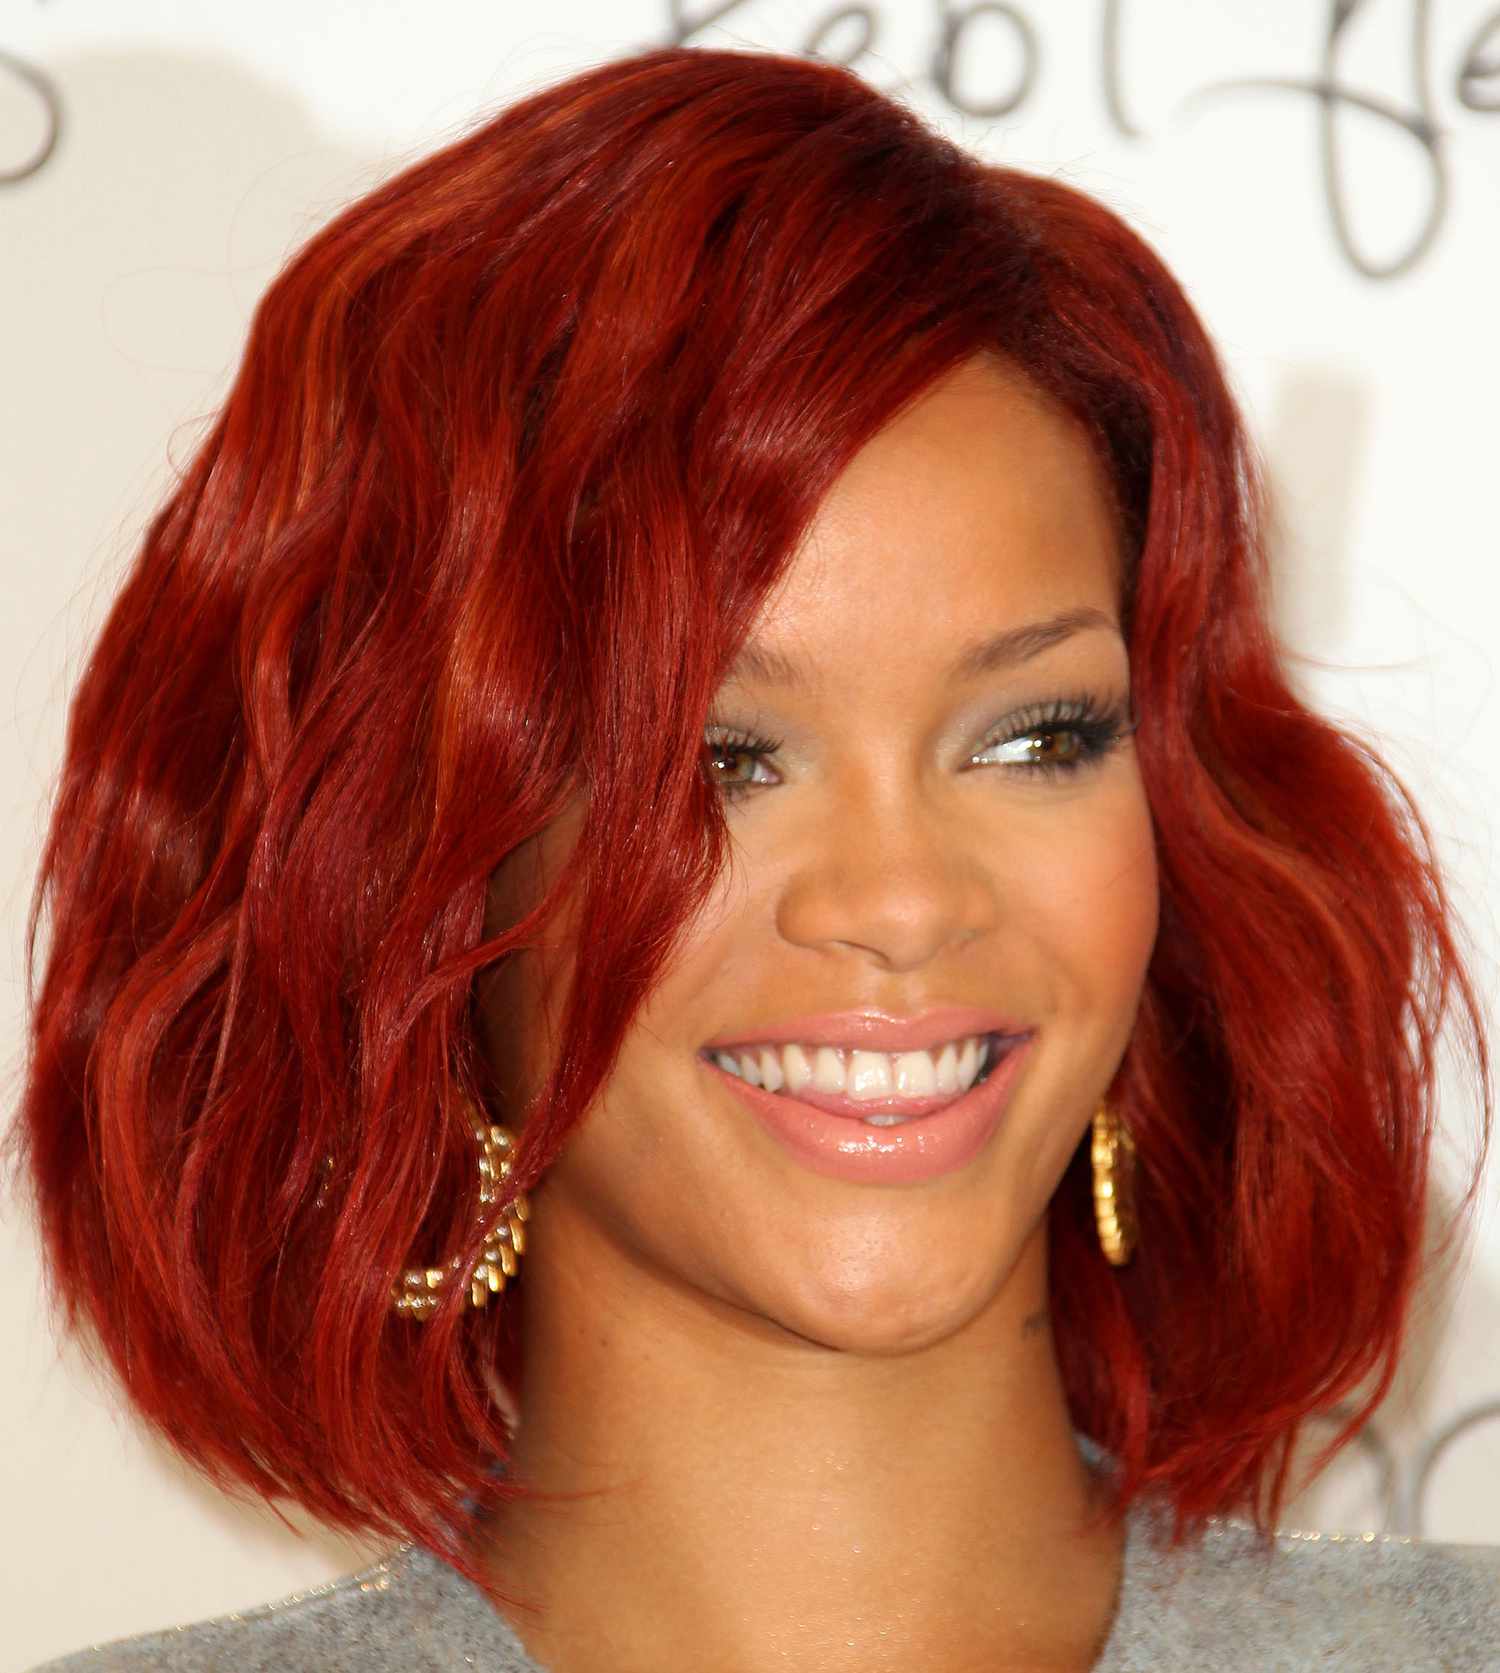 Rihanna wears a red wavy voluminous bob hairstyle and fresh makeup